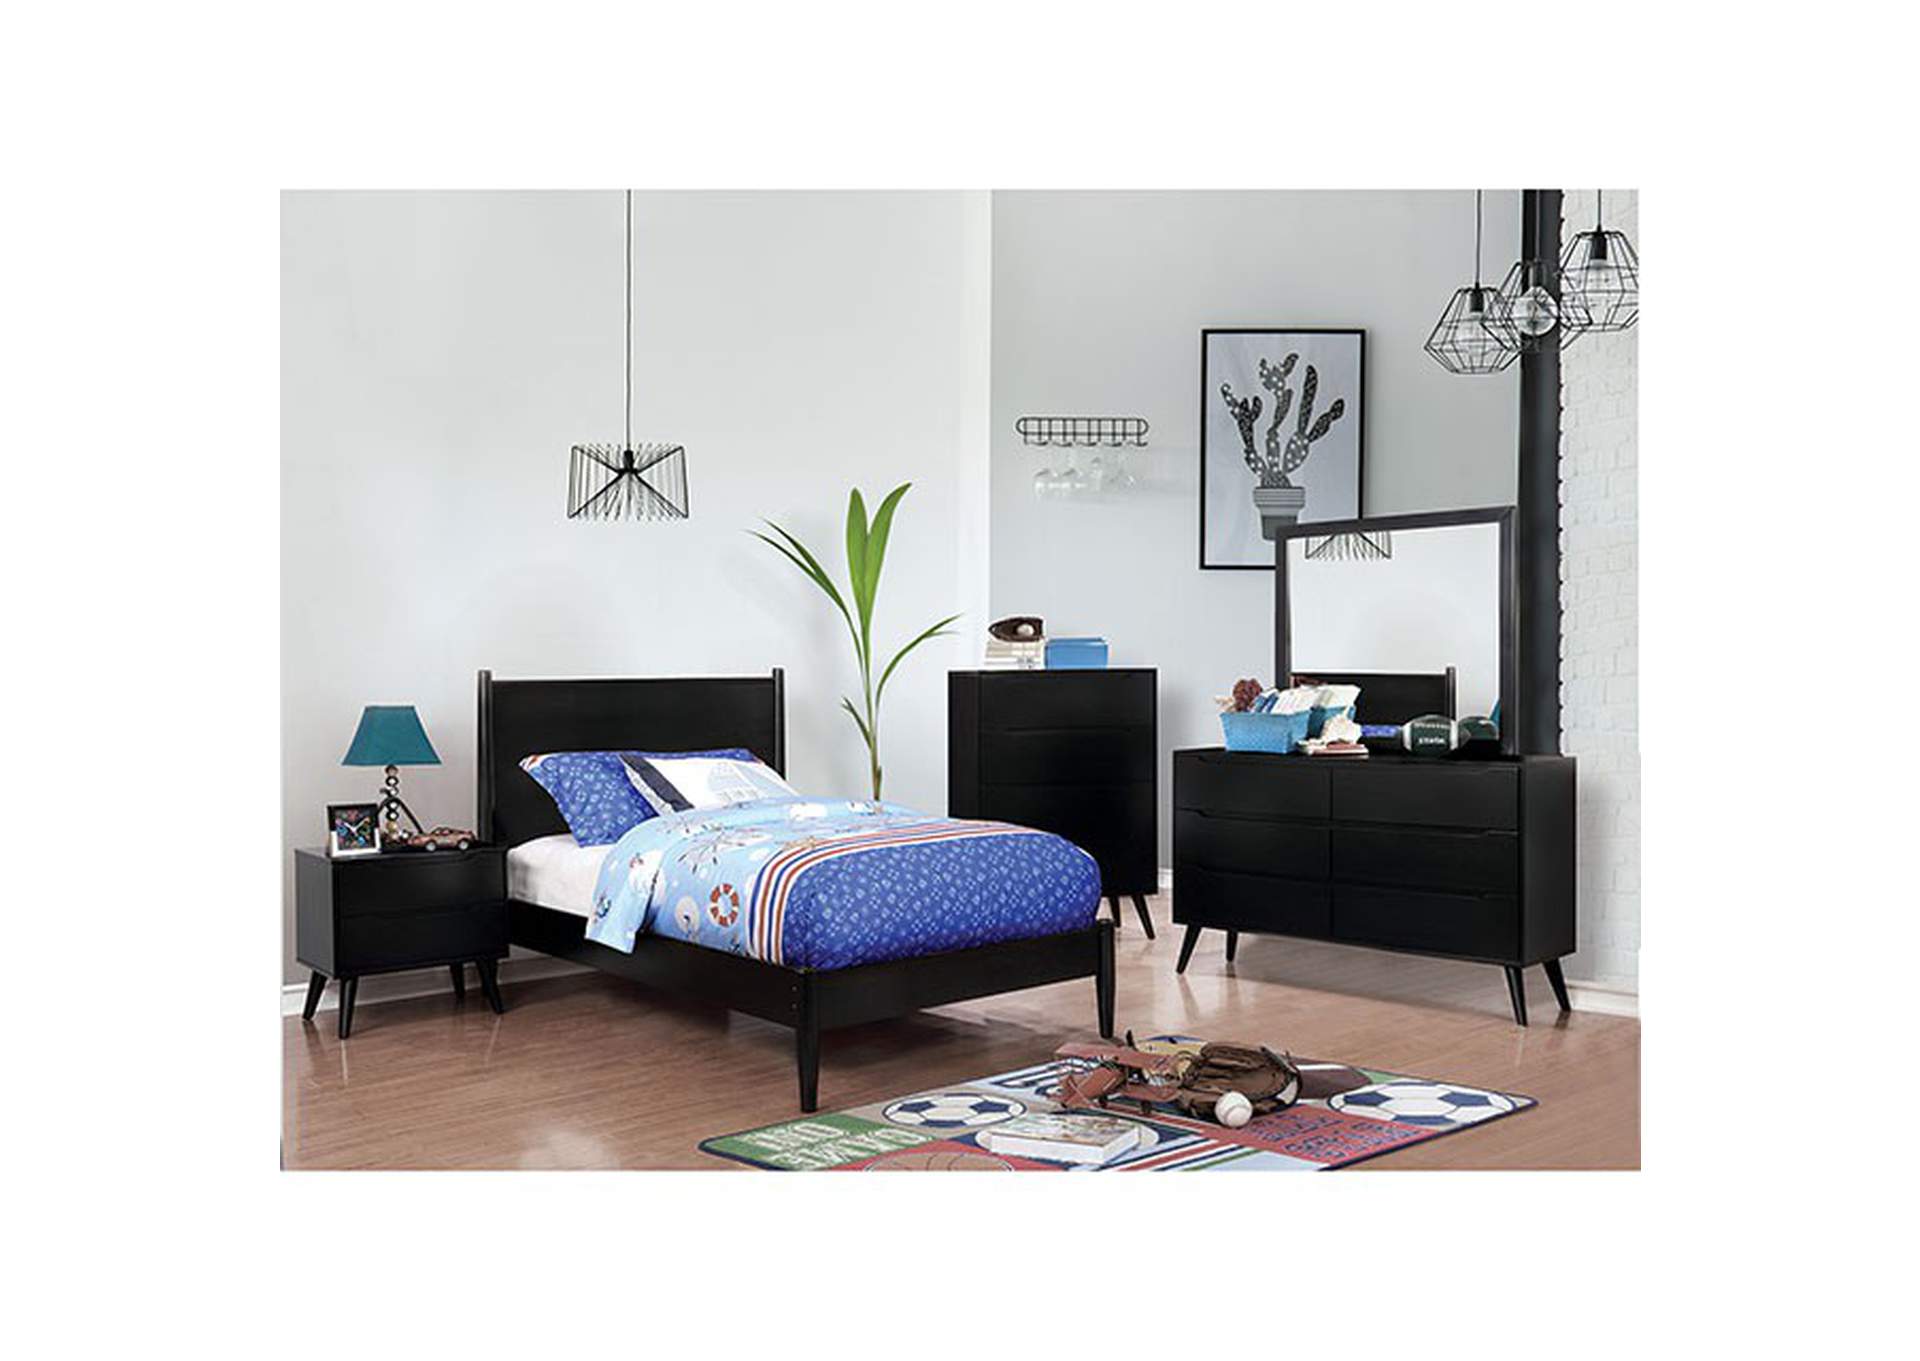 Lennart Black Queen Bed,Furniture of America